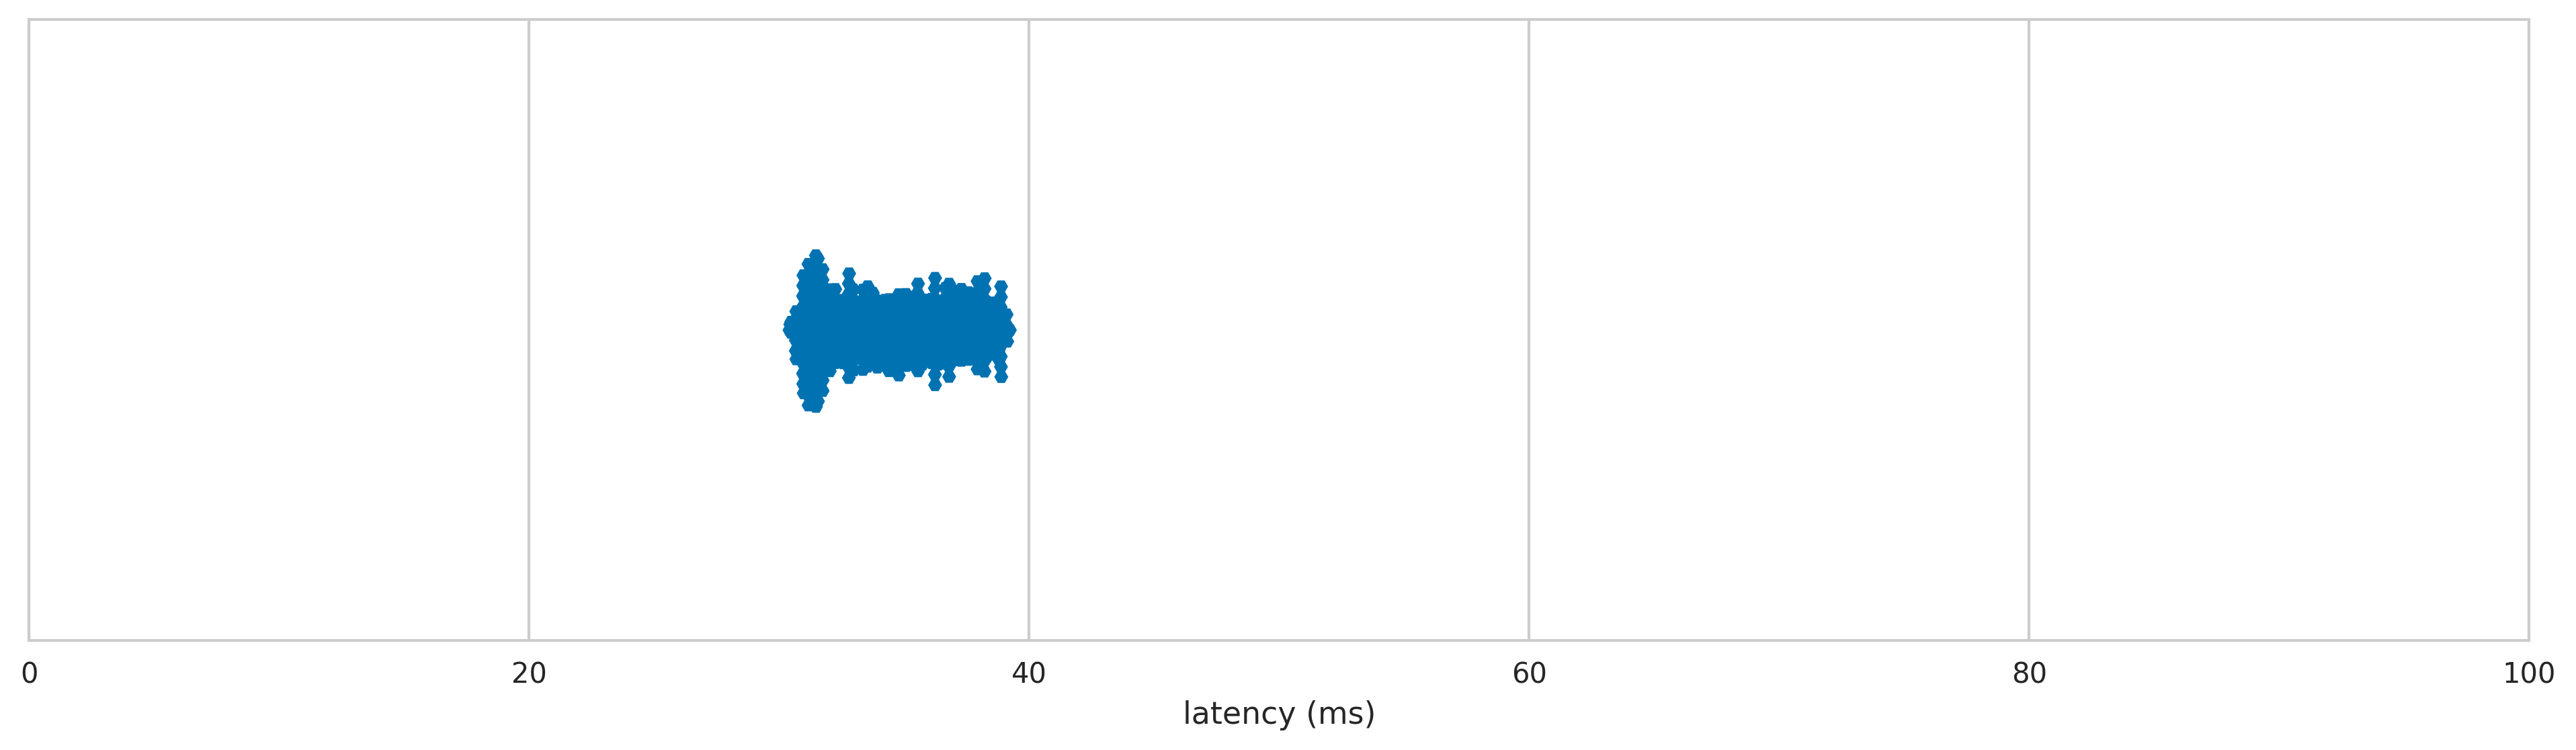 Apple A1152 latency distribution 